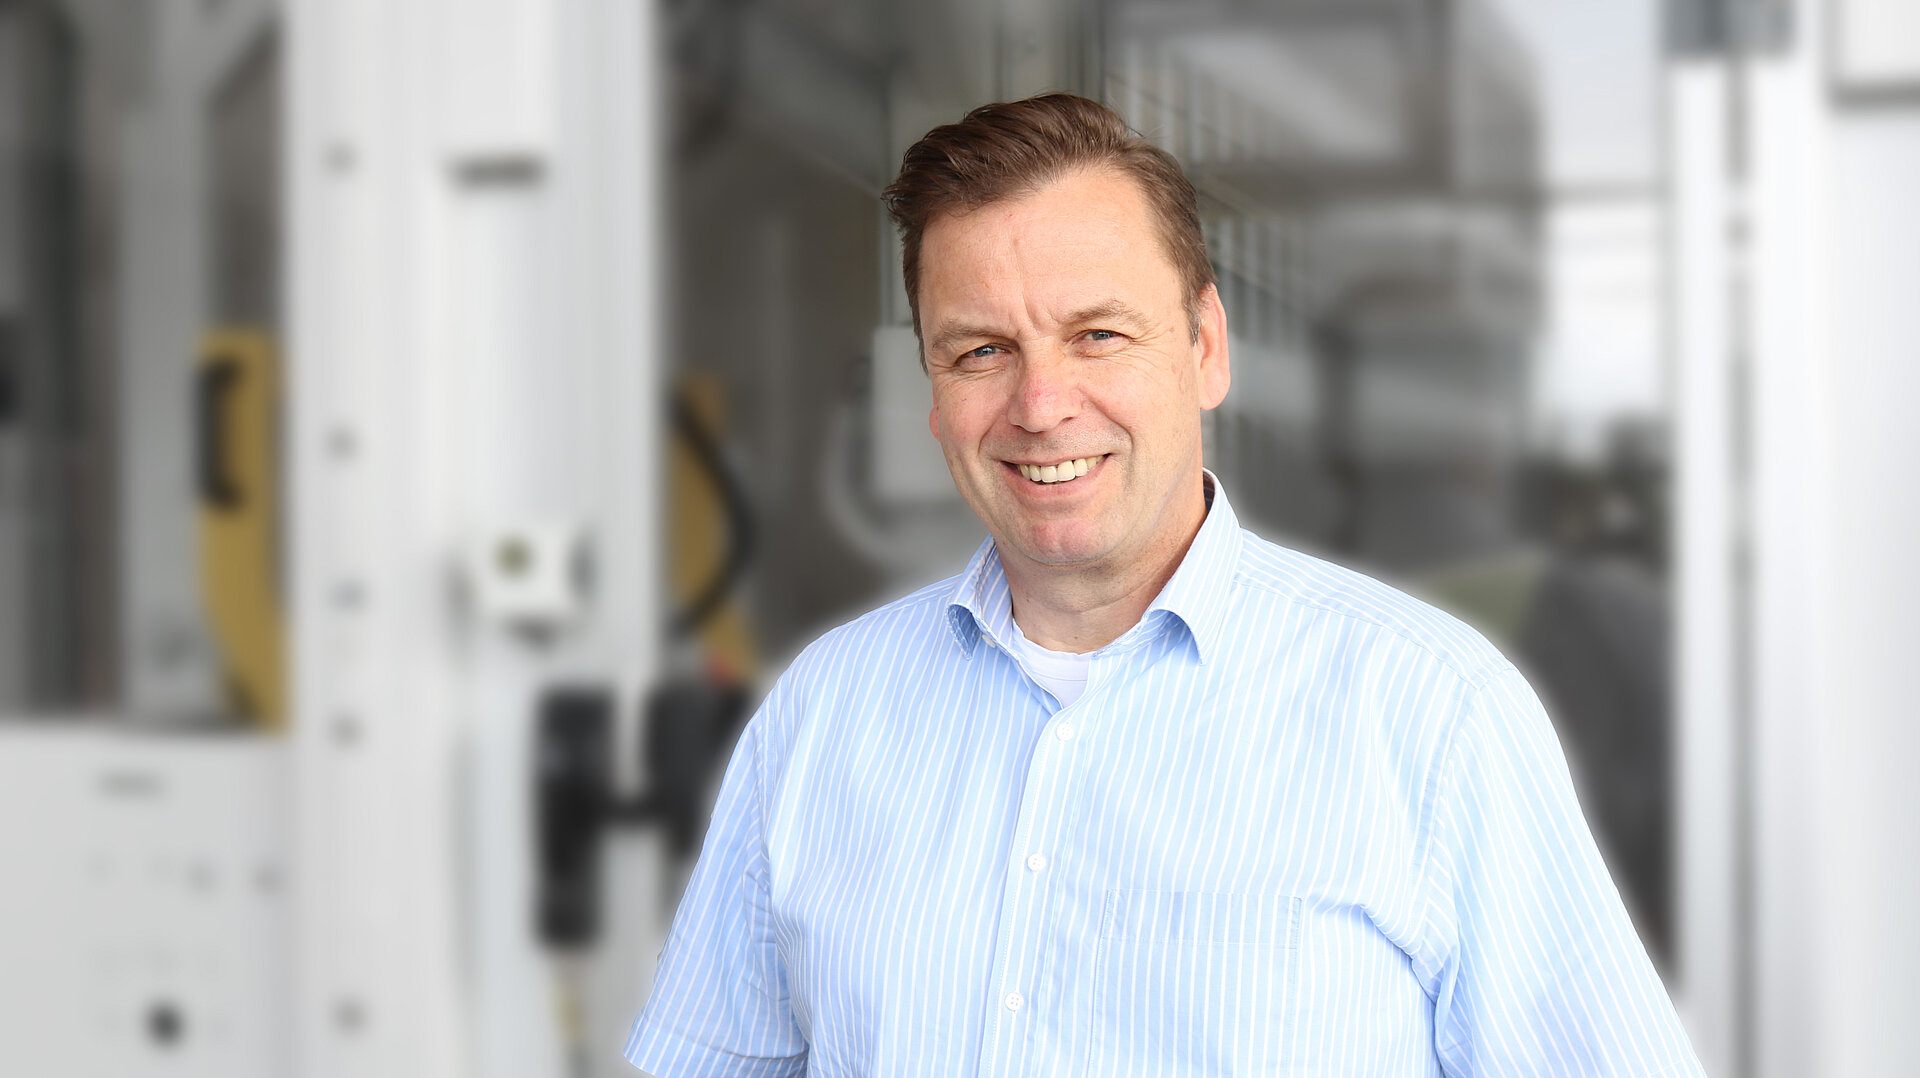 Dipl.-Ing. Klaus Hamacher is Director New Business Development at BST GmbH.